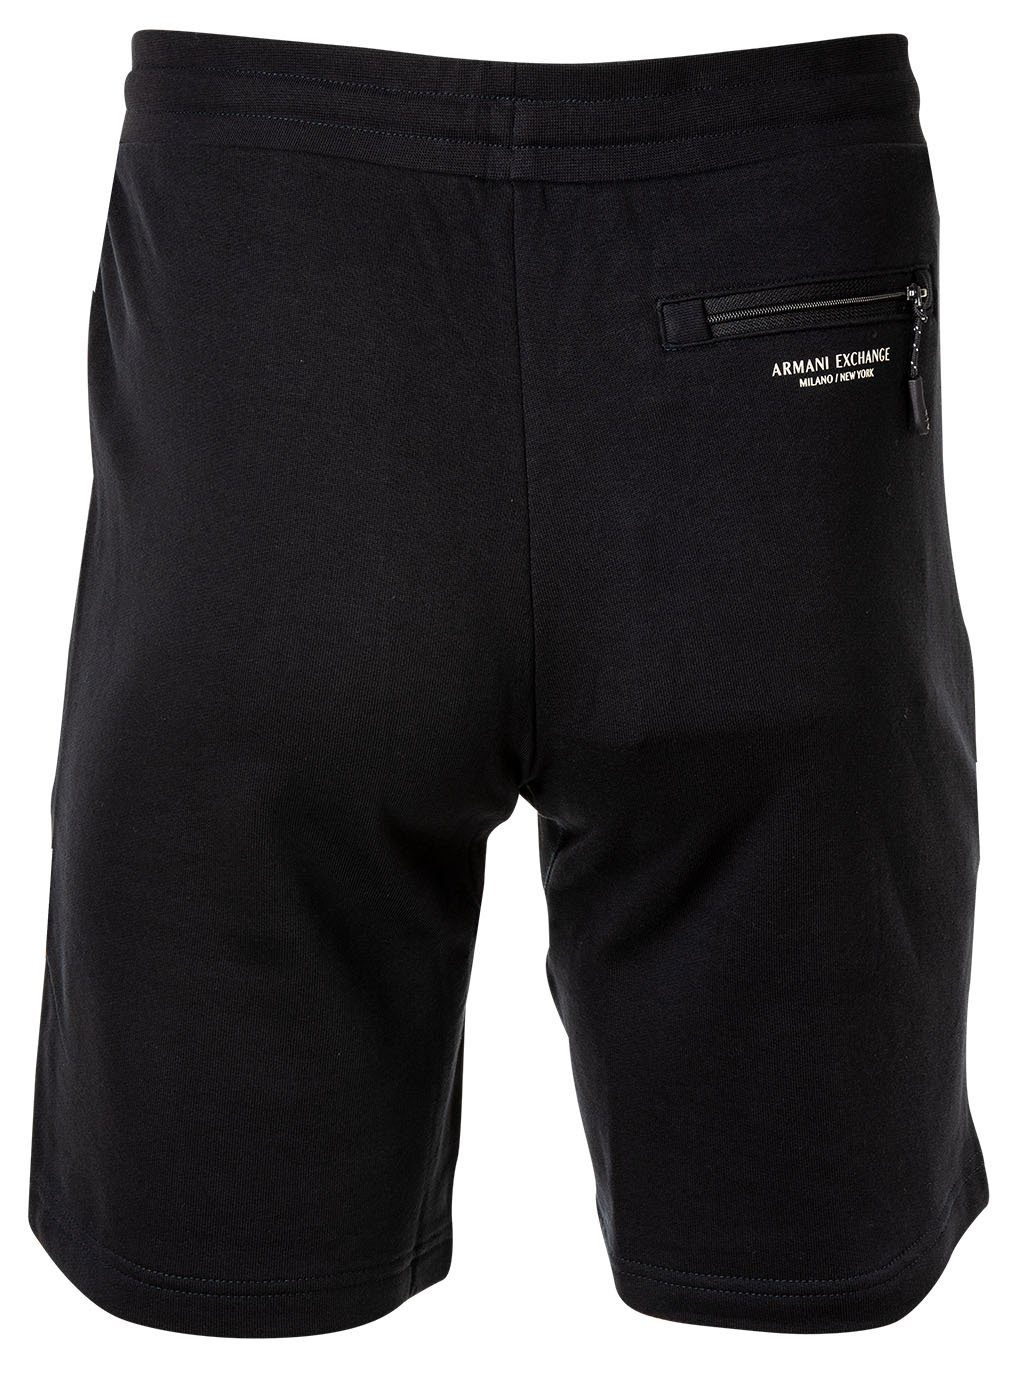 ARMANI EXCHANGE Sweatshorts Herren Pants, Marine - kurz Loungewear Jogginghose